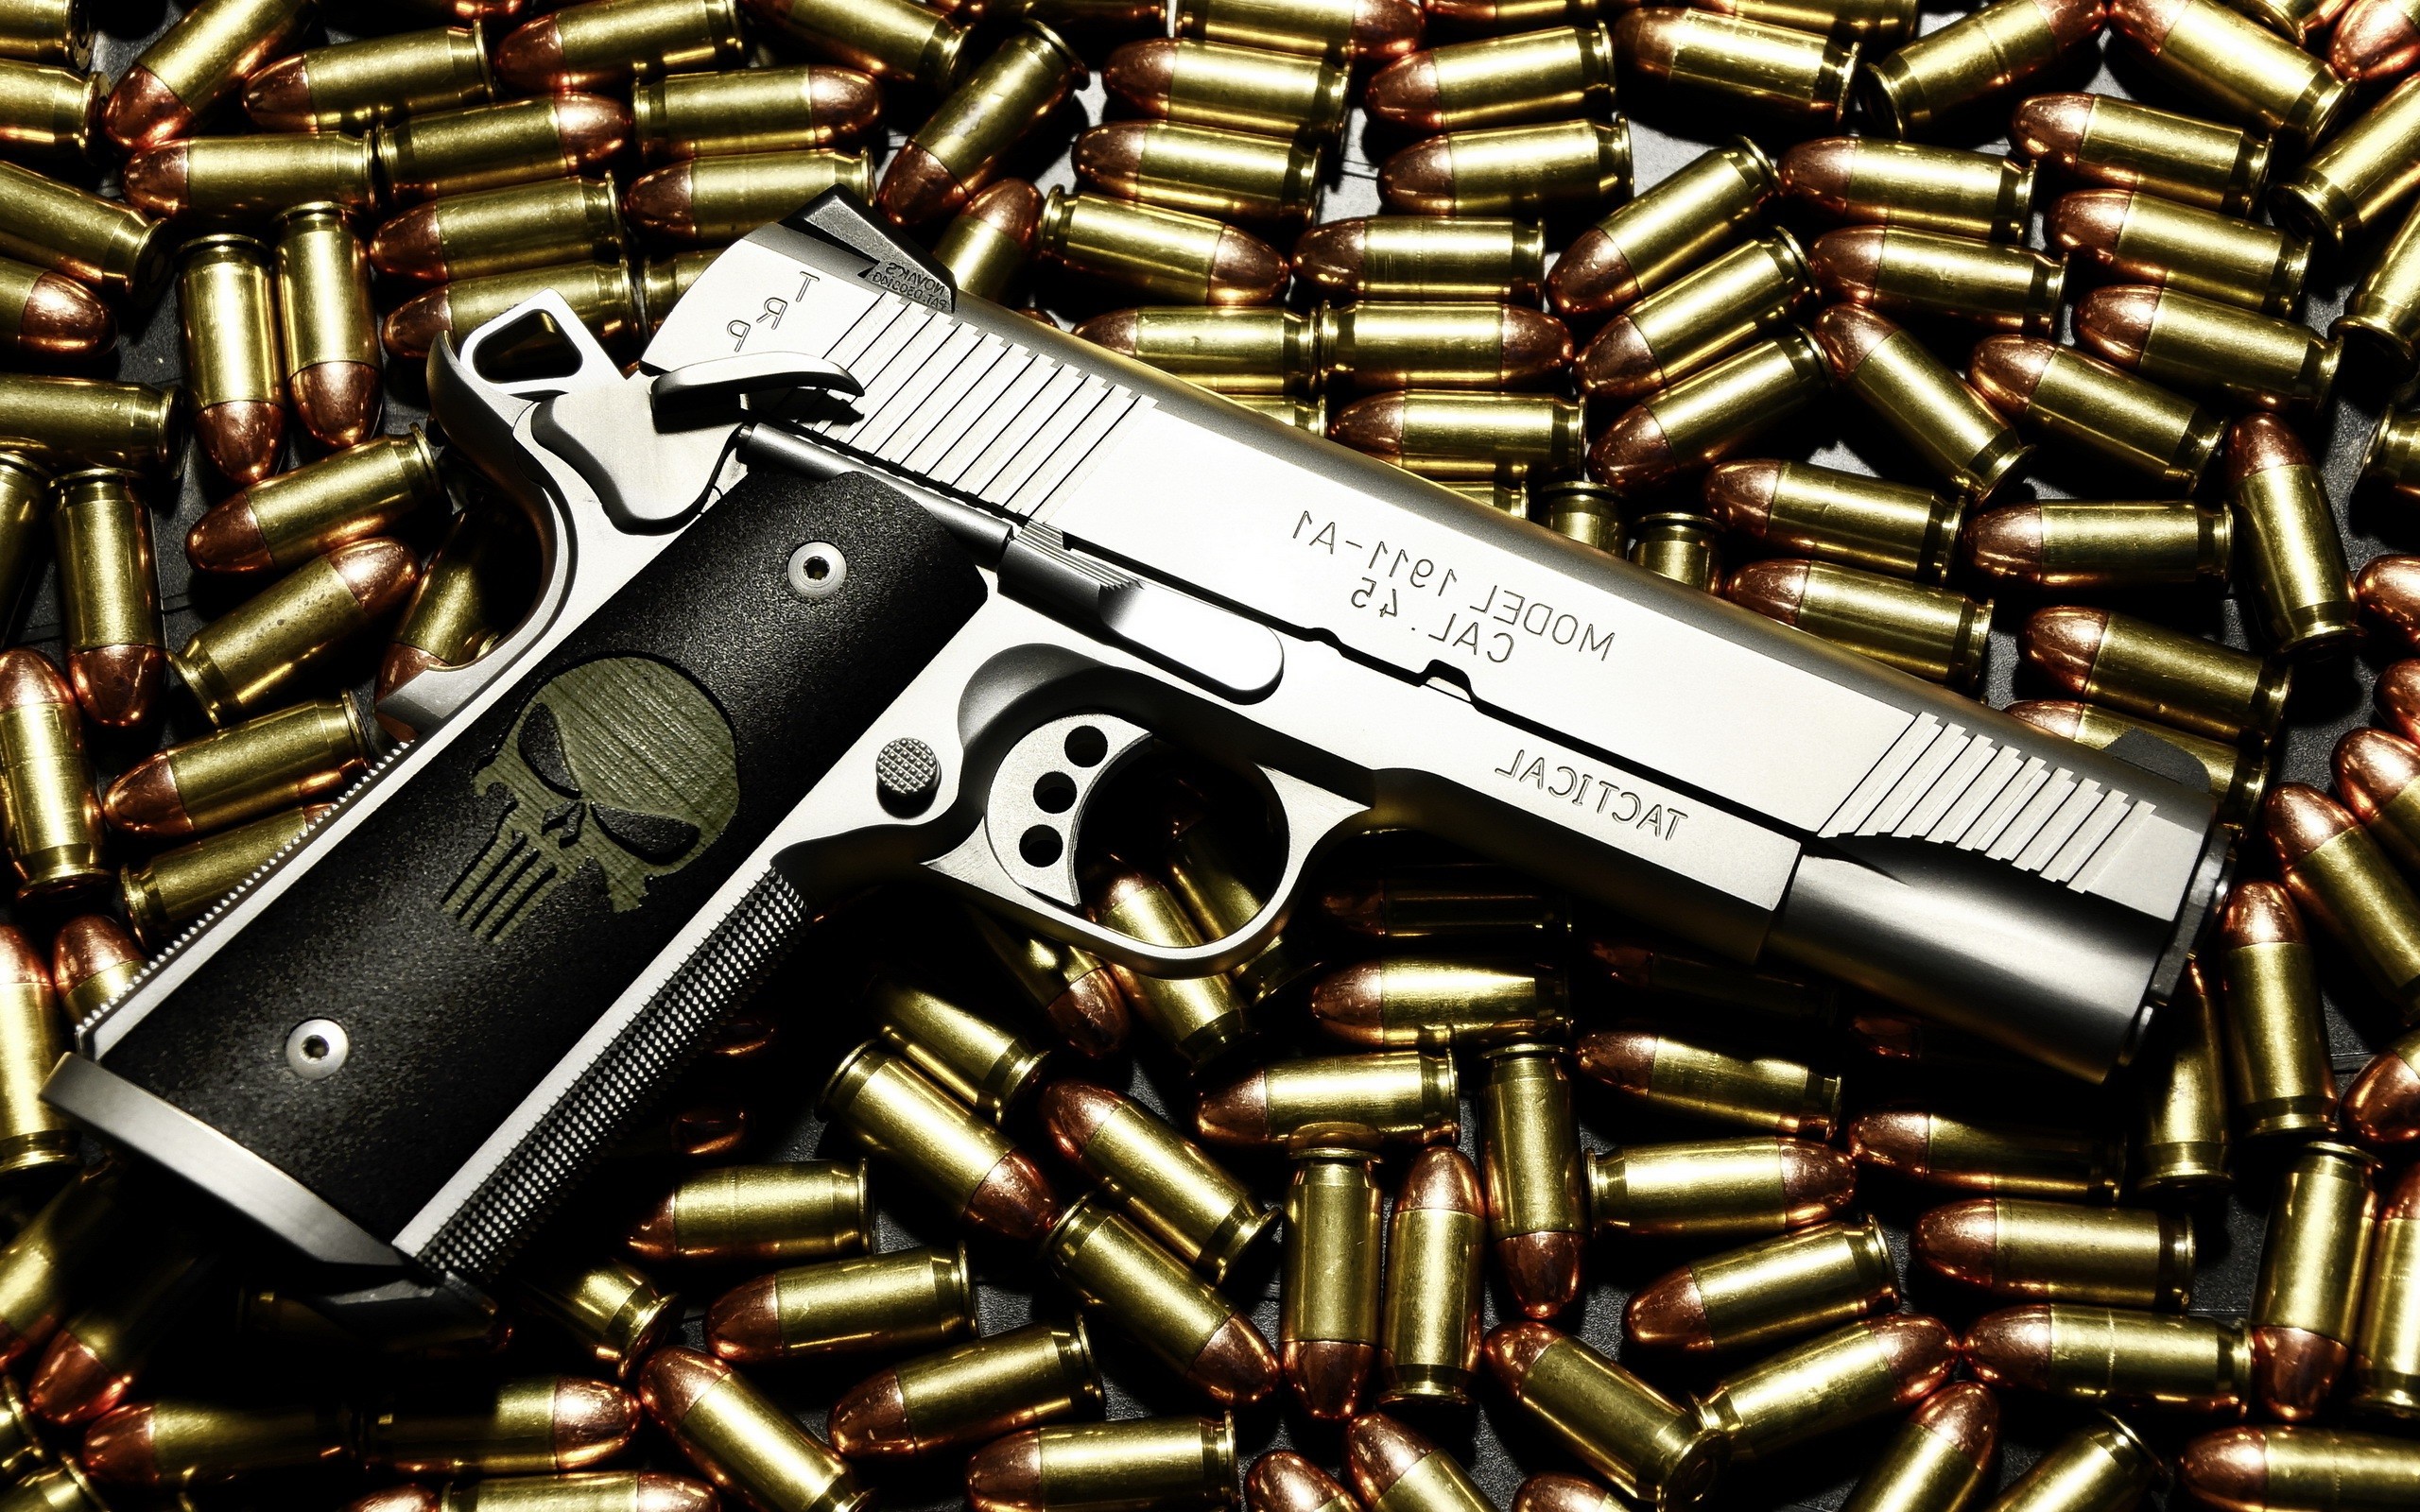 Gun and ammo